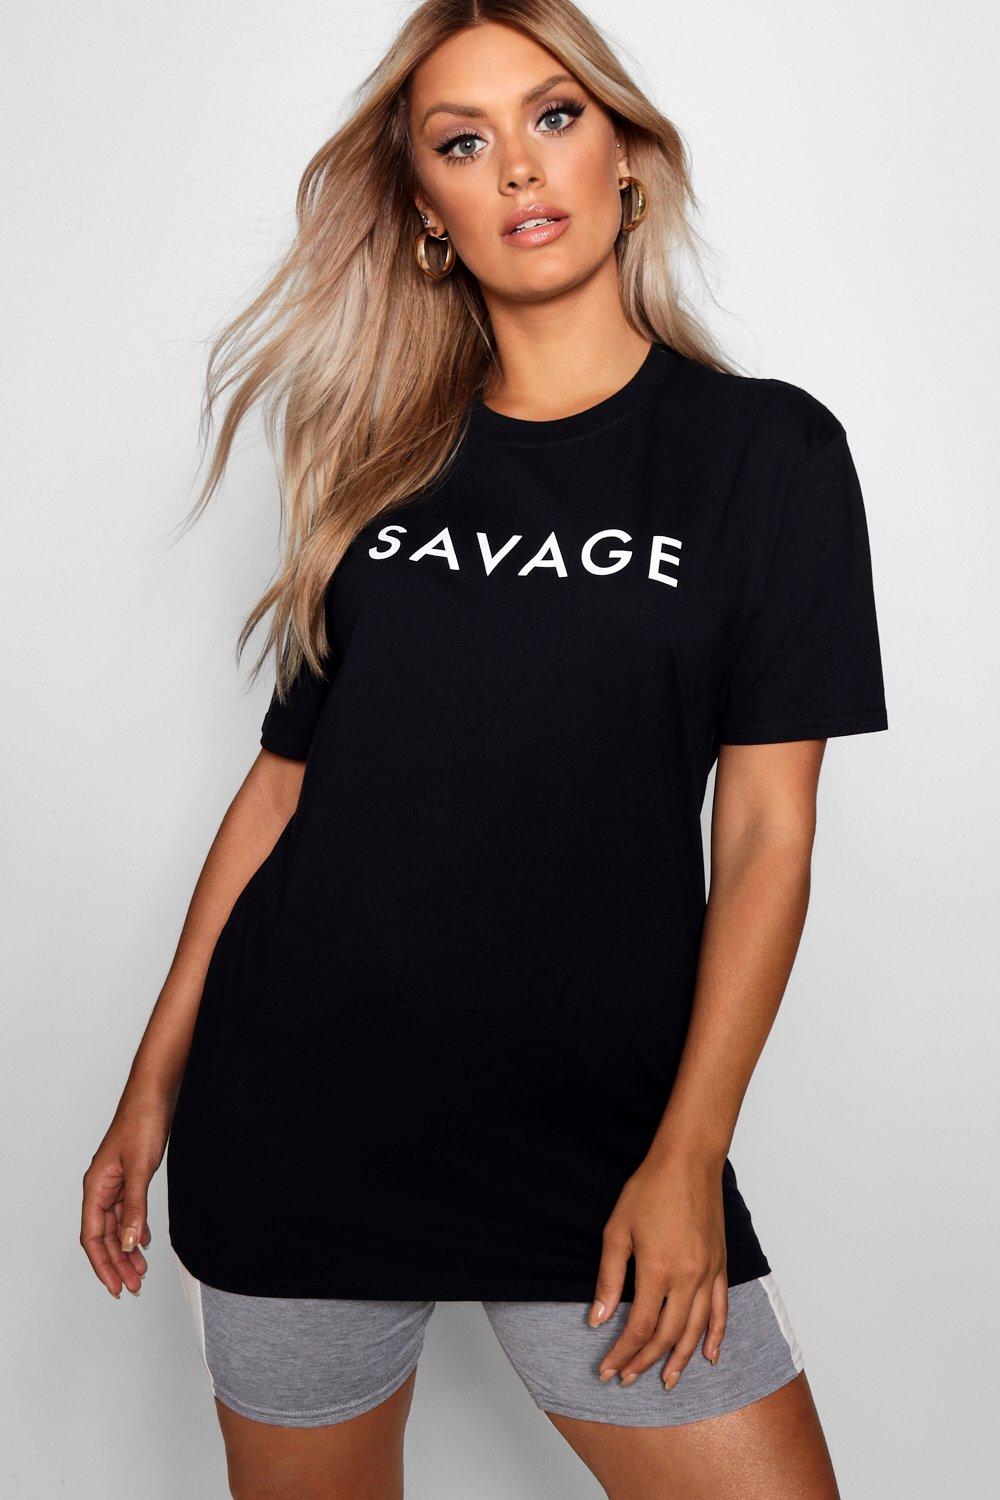 LOVE Black 'Savage' Slogan Tshirt Top